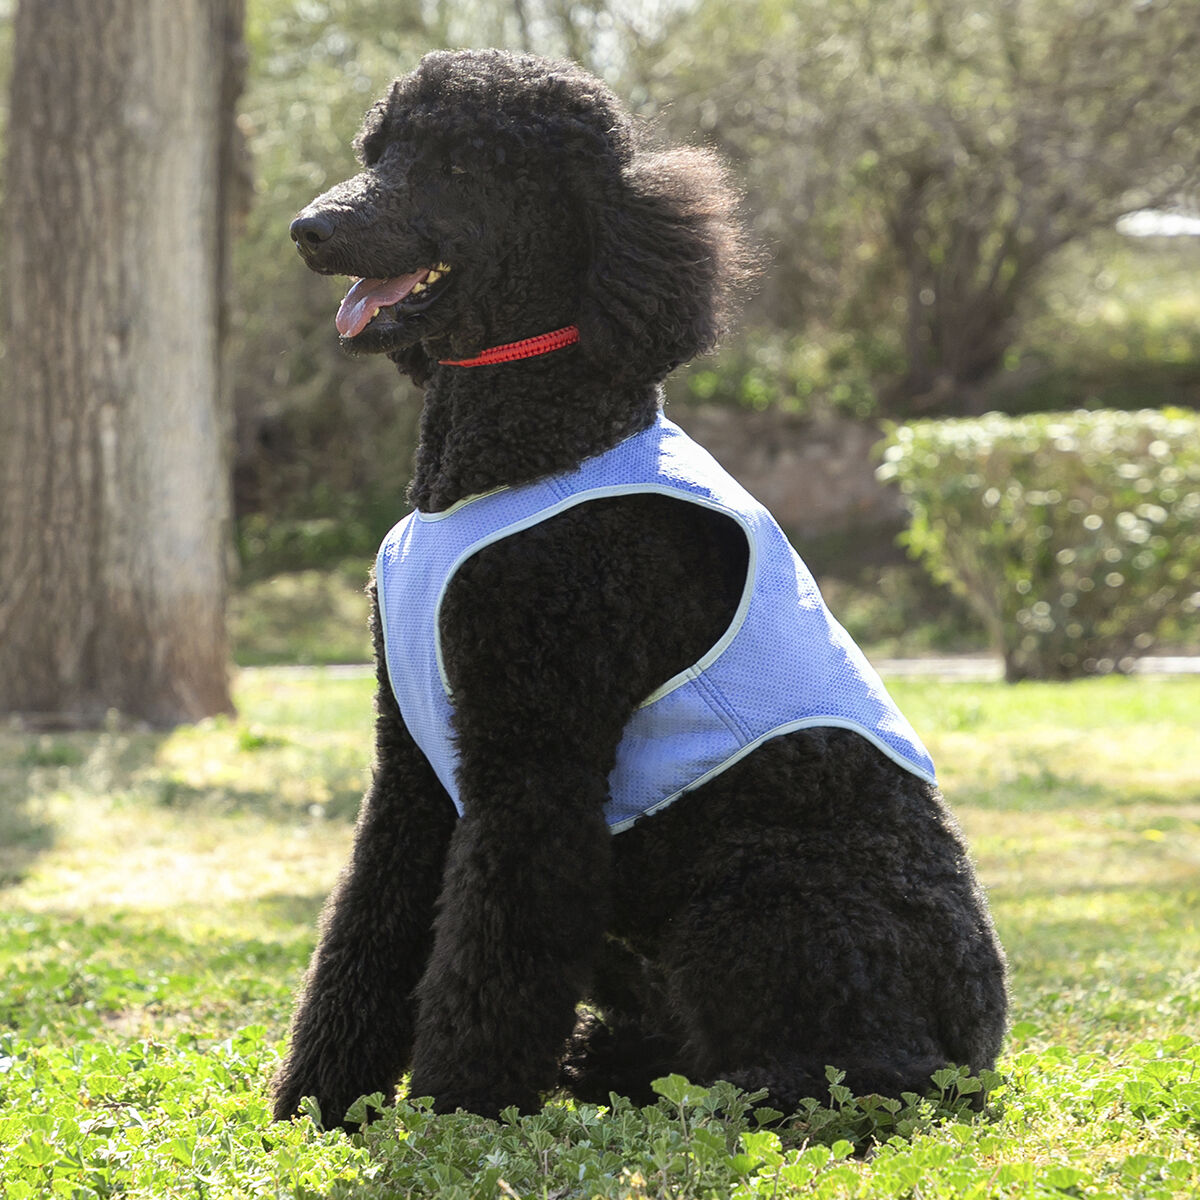 InnovaGoods Refreshing Pet Vest for Medium Pets - M